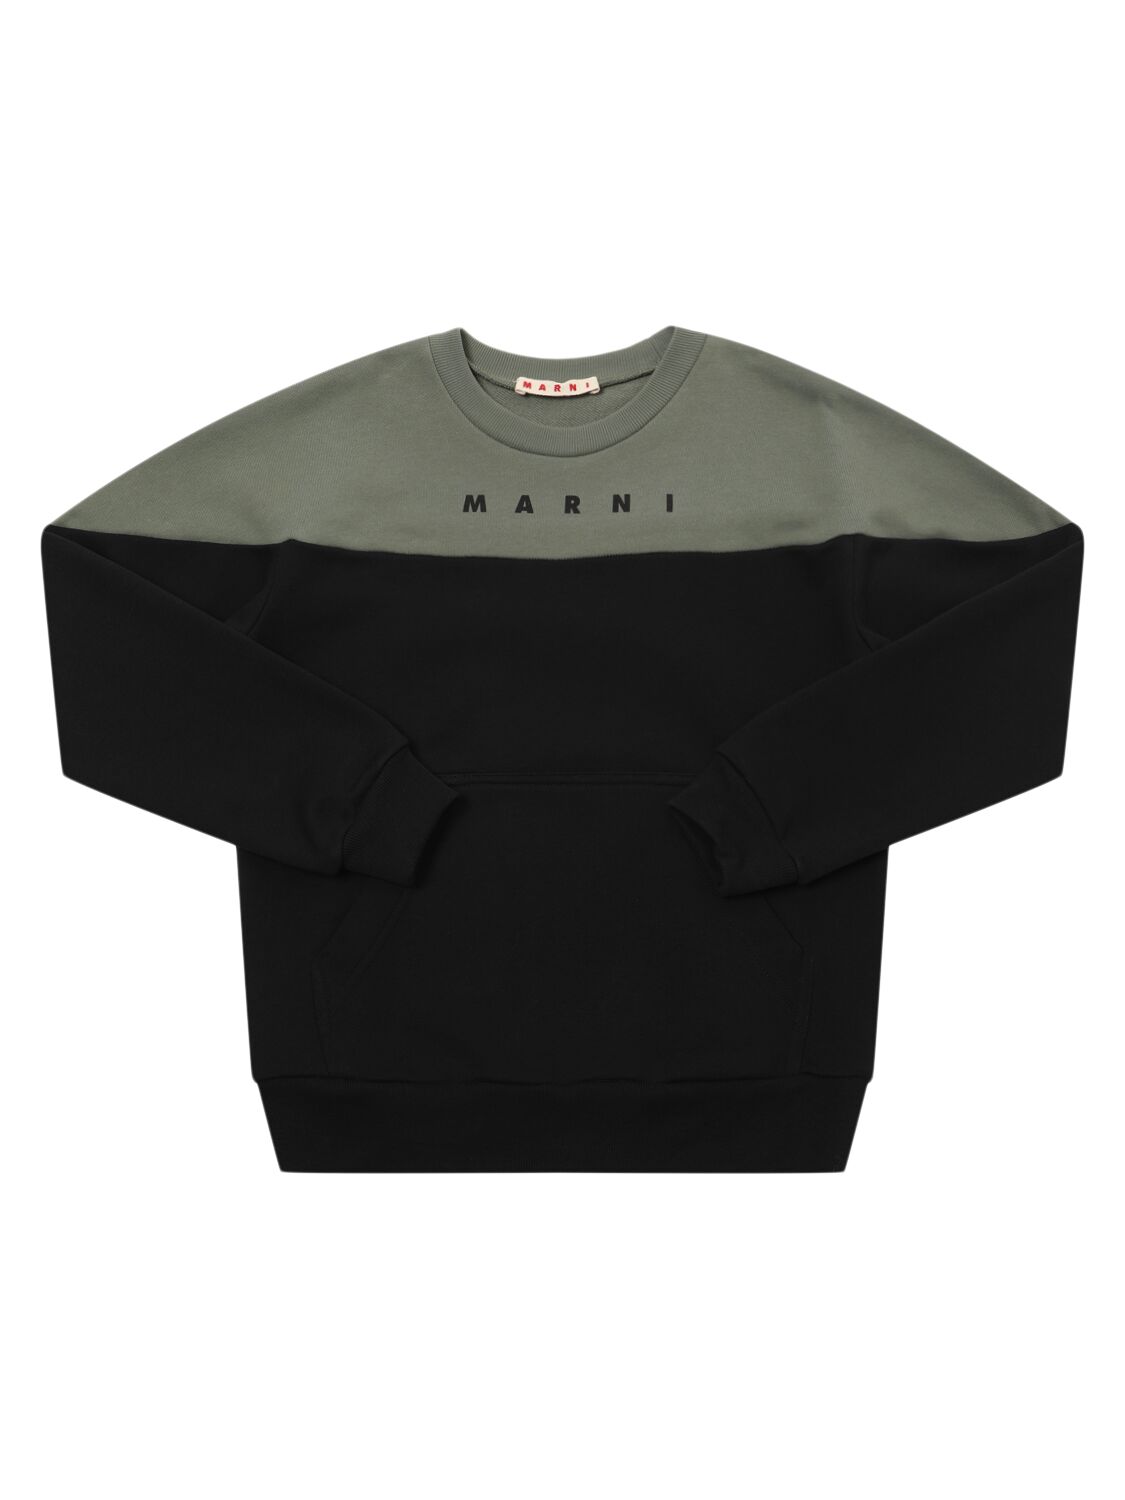 Marni Junior Cotton Crewneck Sweatshirt W/logo In Black/green